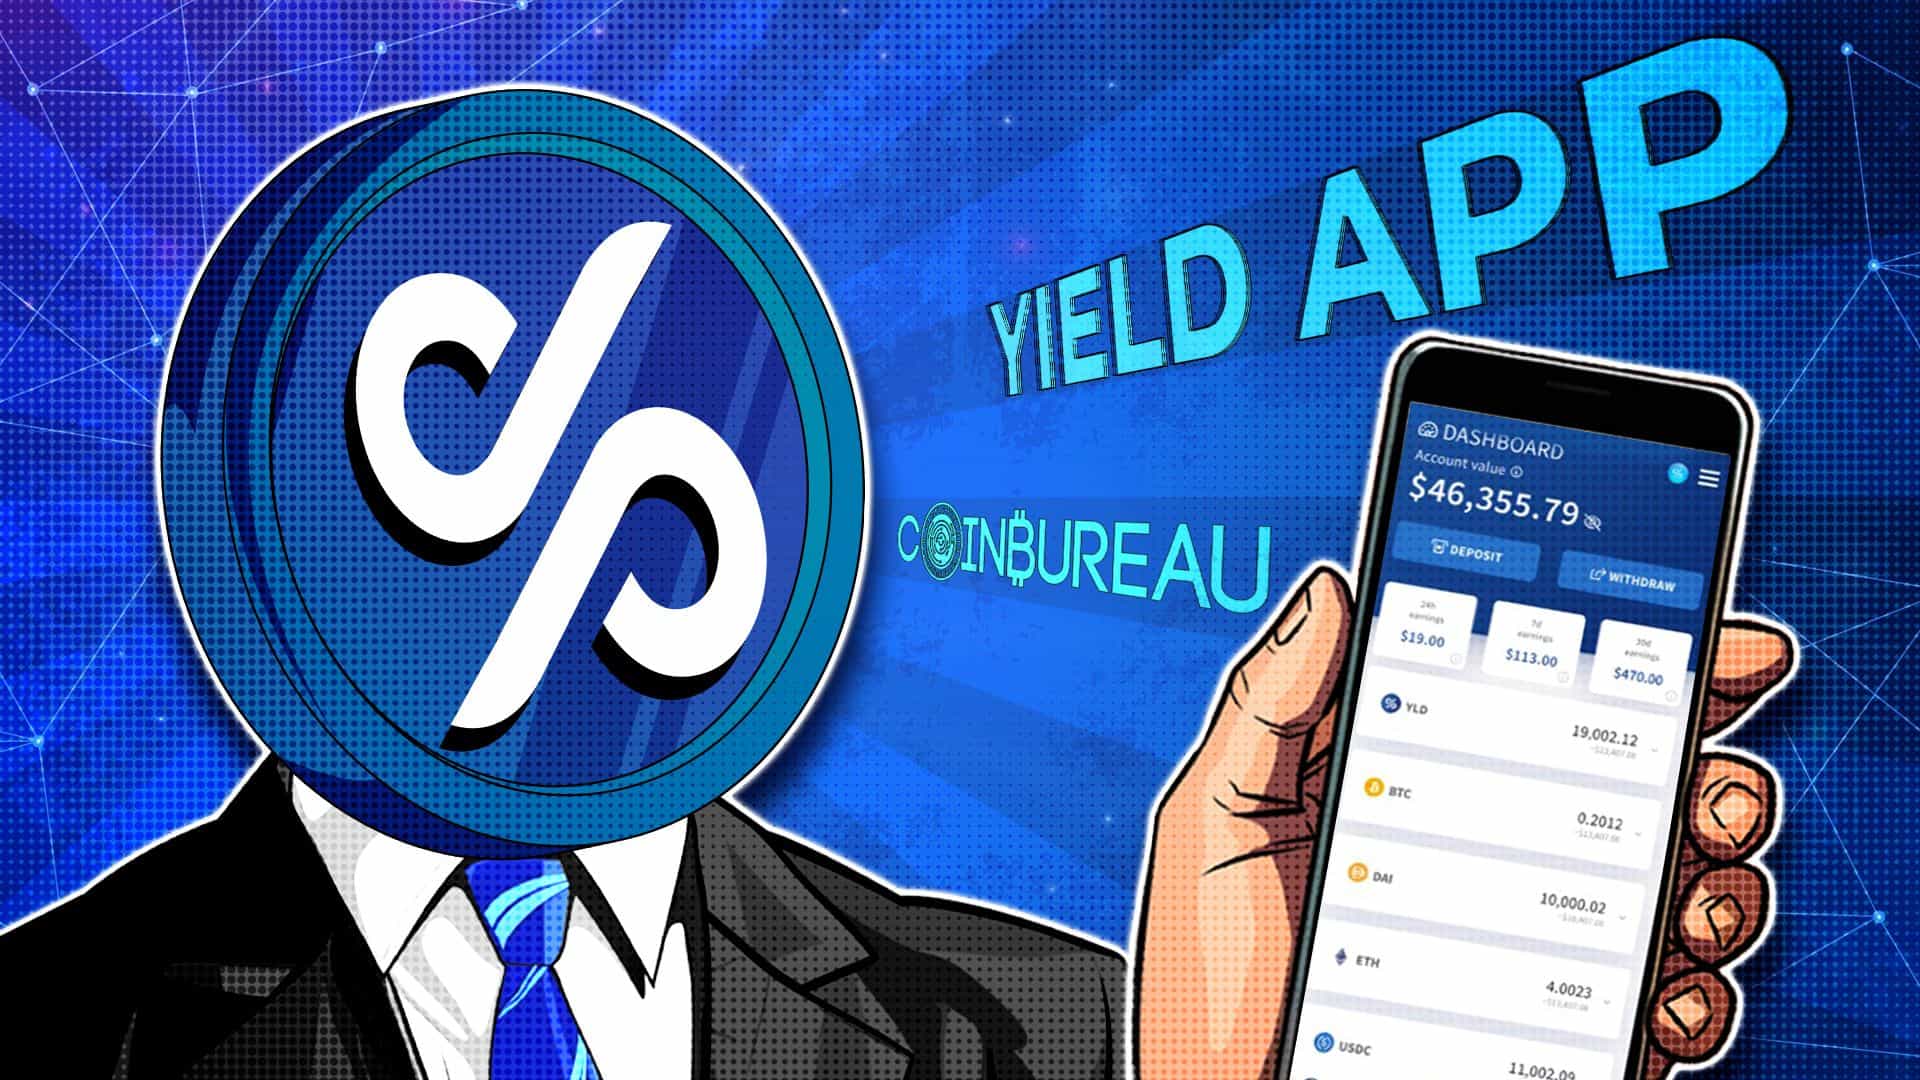 Yield App Review: A Secure Digital Wealth Platform